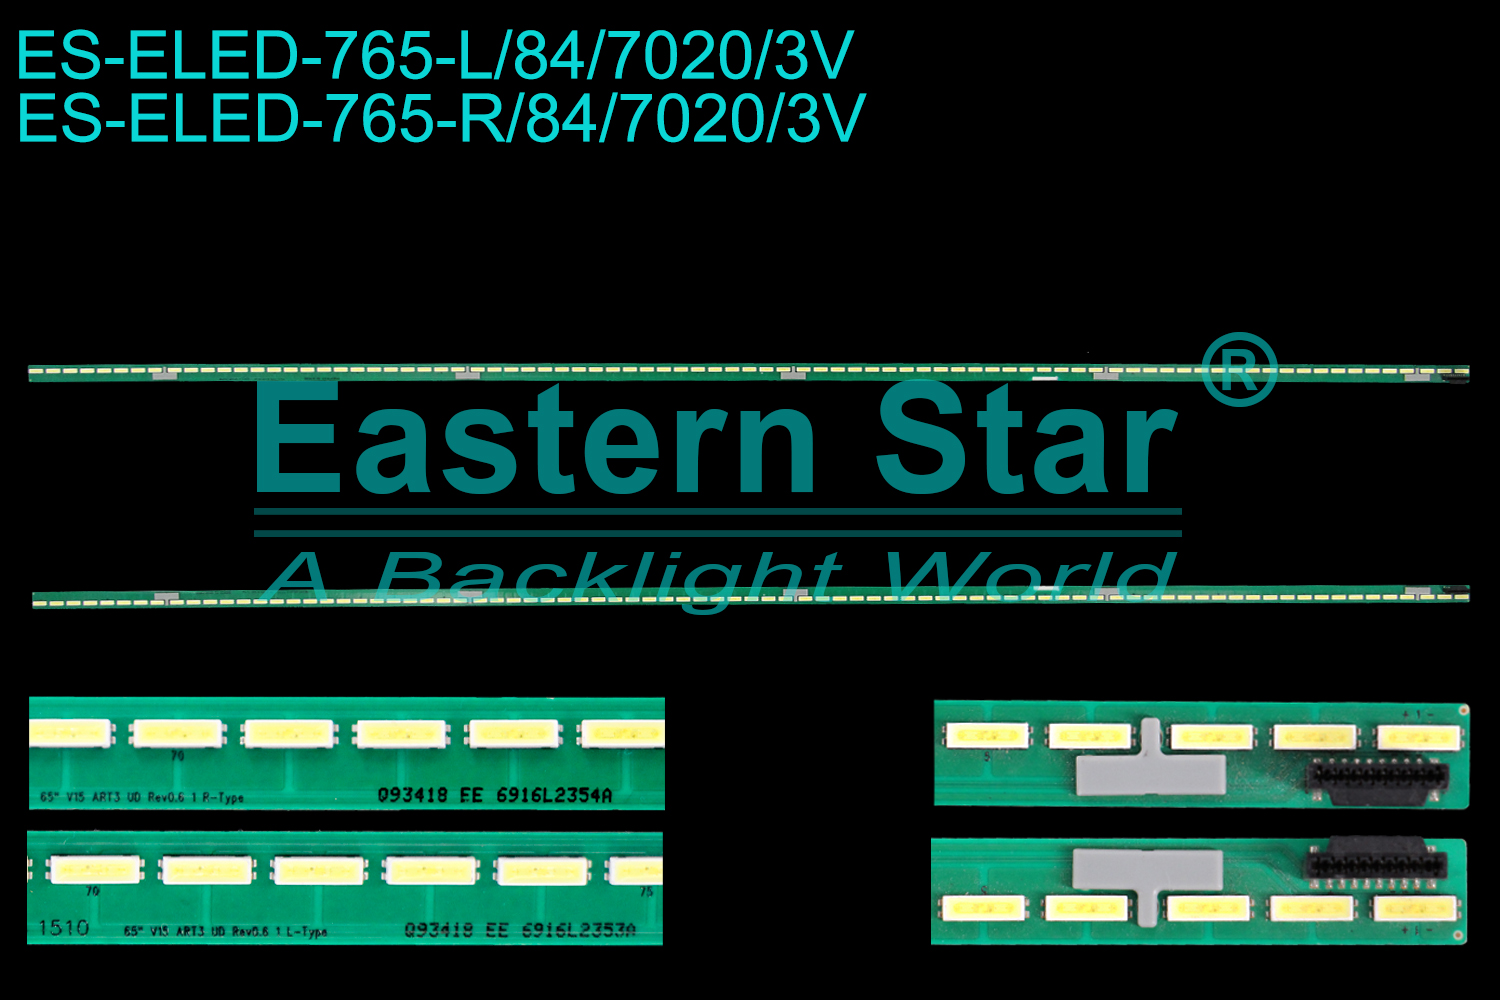 ES-ELED-765 ELED/EDGE TV backlight use for 65'' Lg 65UF6800-CA L: 65" V15 ART3 UD Rev0.6 1 L-Type Q93418 EE 6916L2353A  R: 65" V15 ART3 UD Rev0.6 1 R-Type Q93418 EE 6916L2354A  LED STRIPS(2)